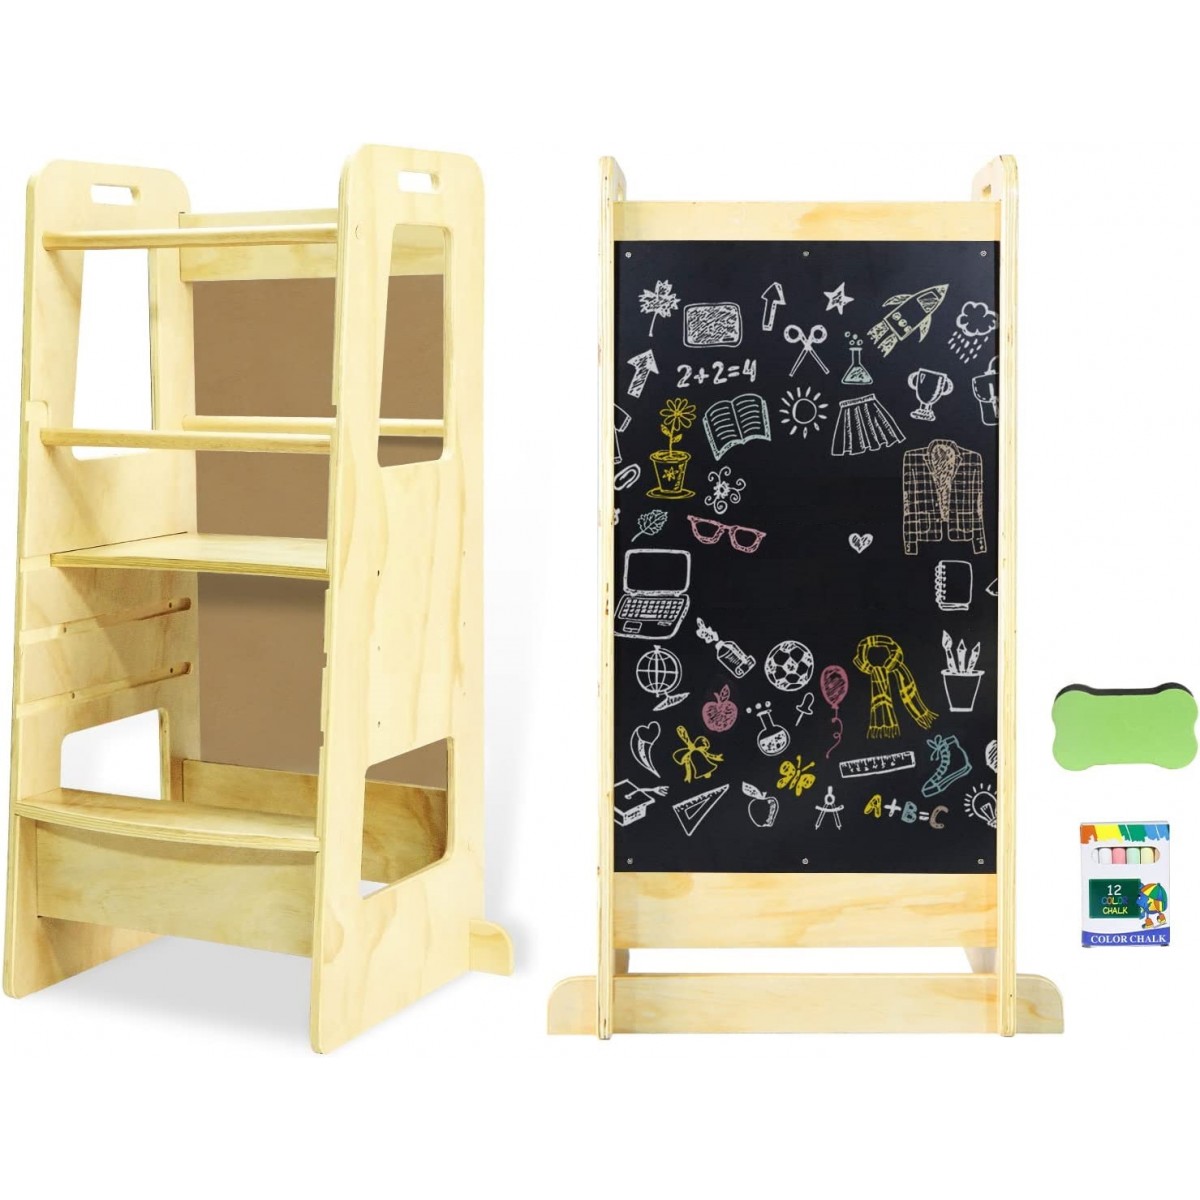 Torre de aprendizaje plegable de madera Montessori altura regulable